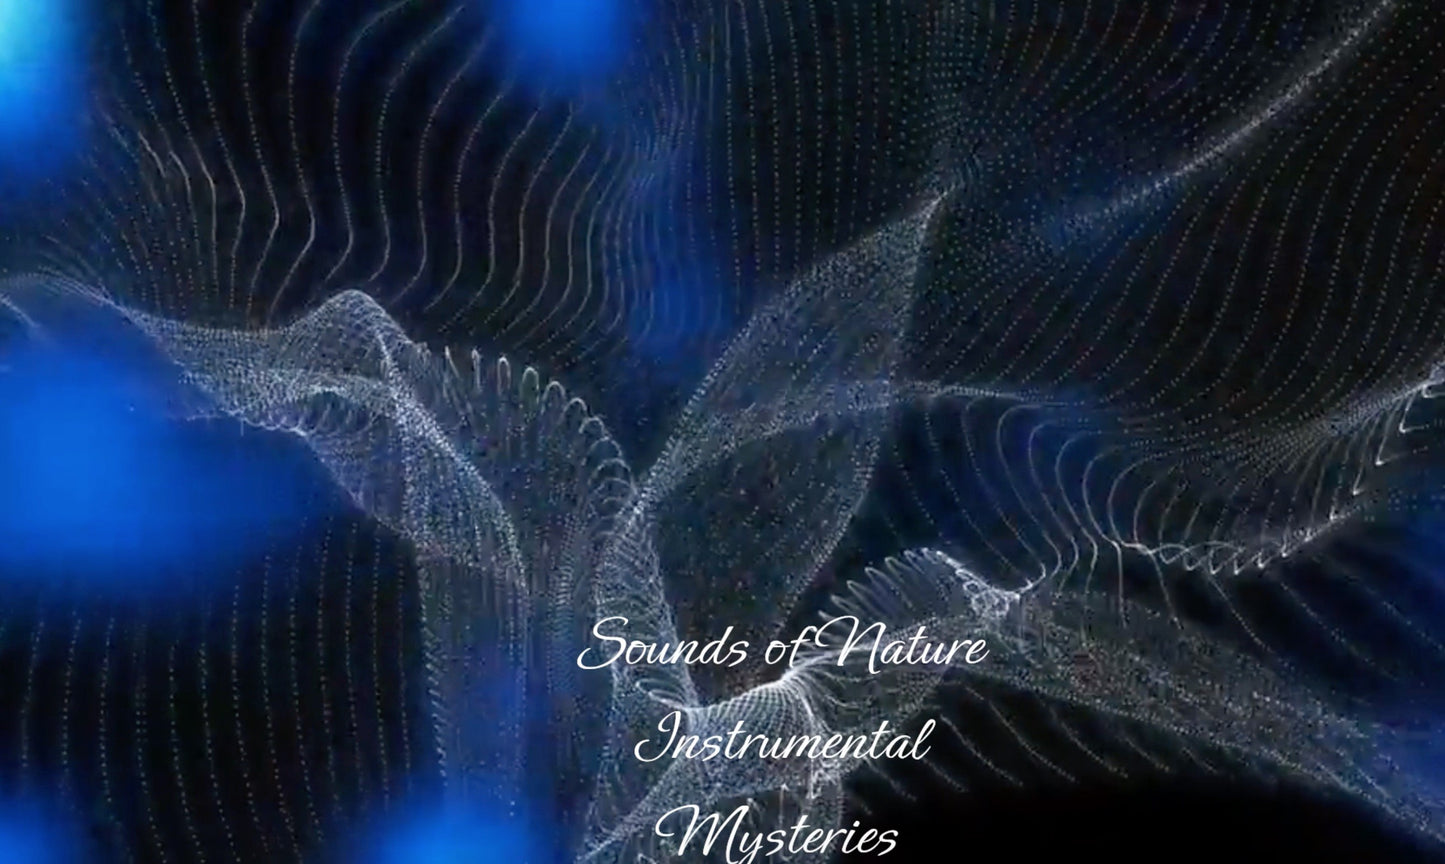 AliyahSky SphereEternal Records Sounds of Nature Instrumental Mysteries